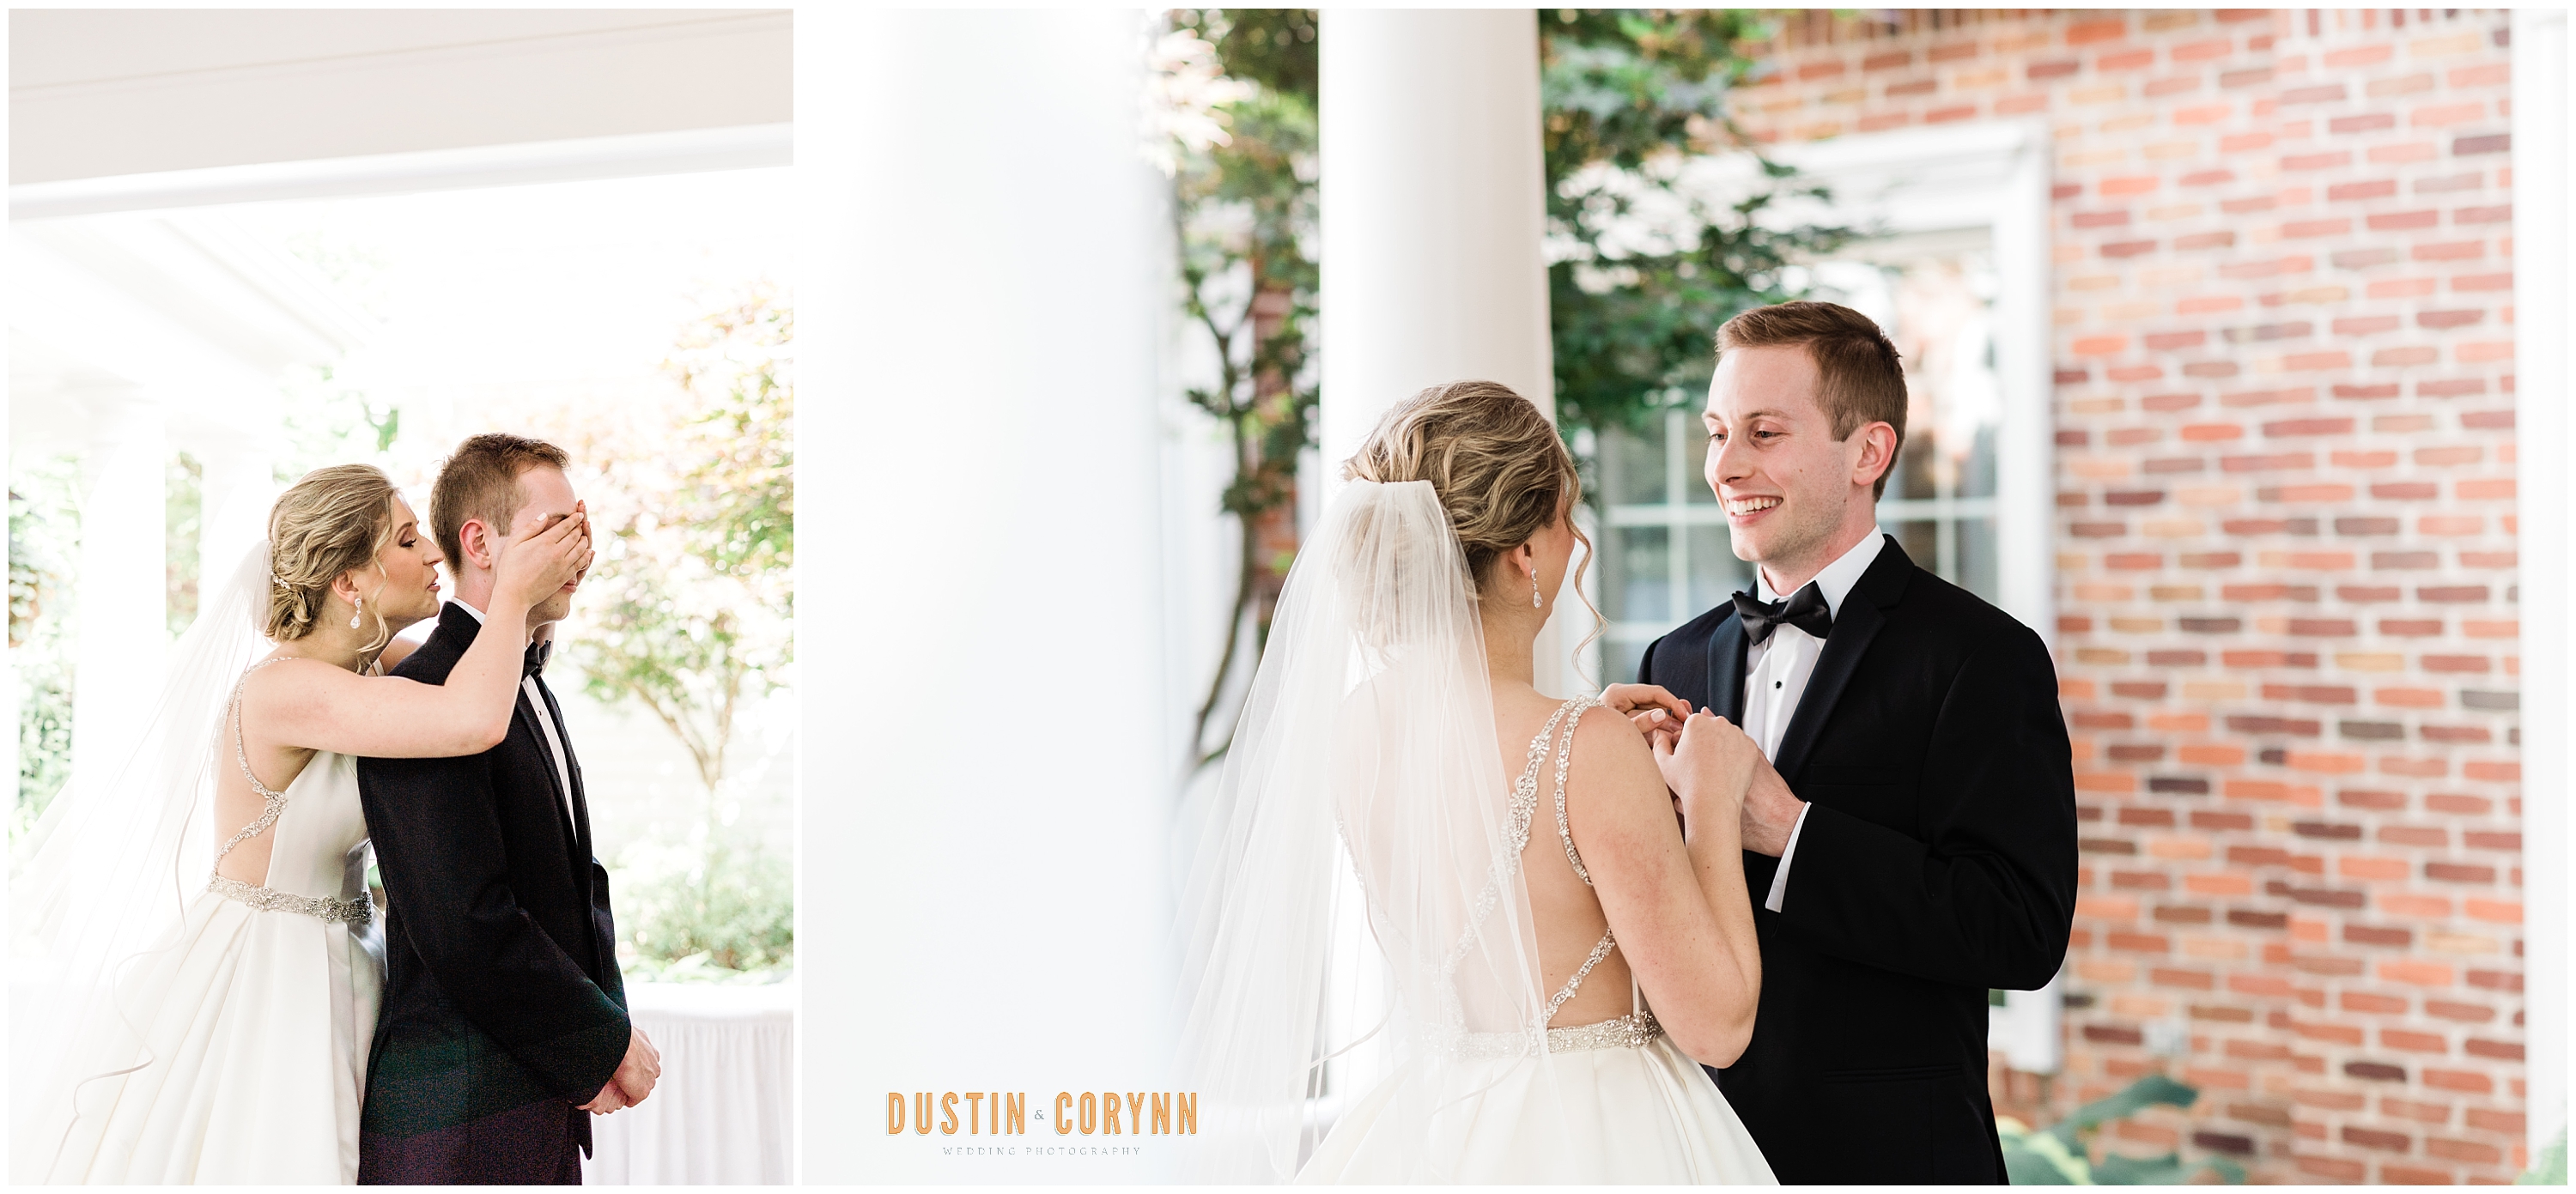 Fort Wayne wedding photographer captures bride and groom's first look before wedding ceremony